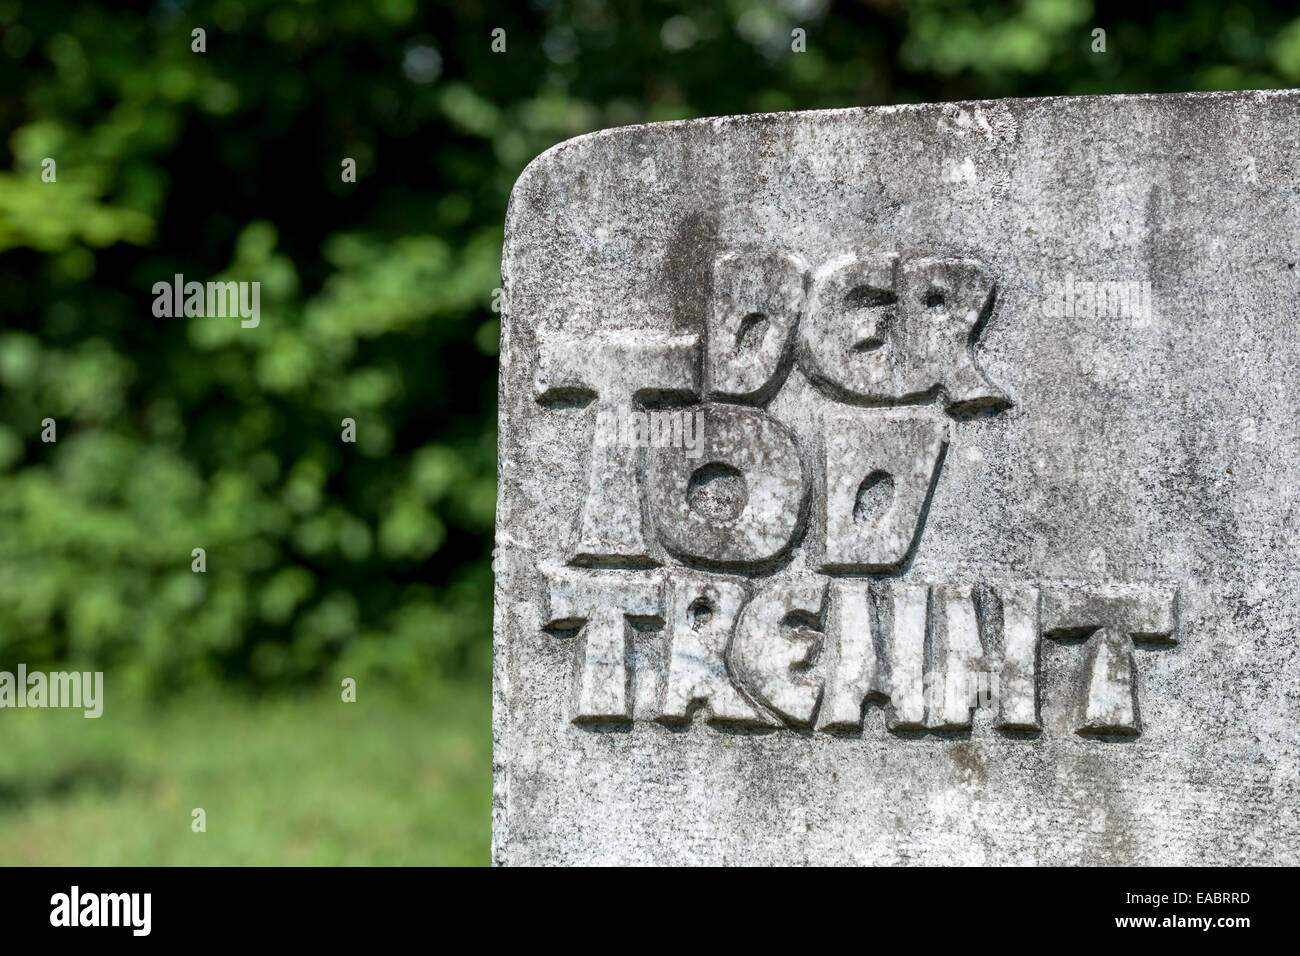 Austria Upper Austria Linz grave yard gravestone with writing The death separates Stock Photo